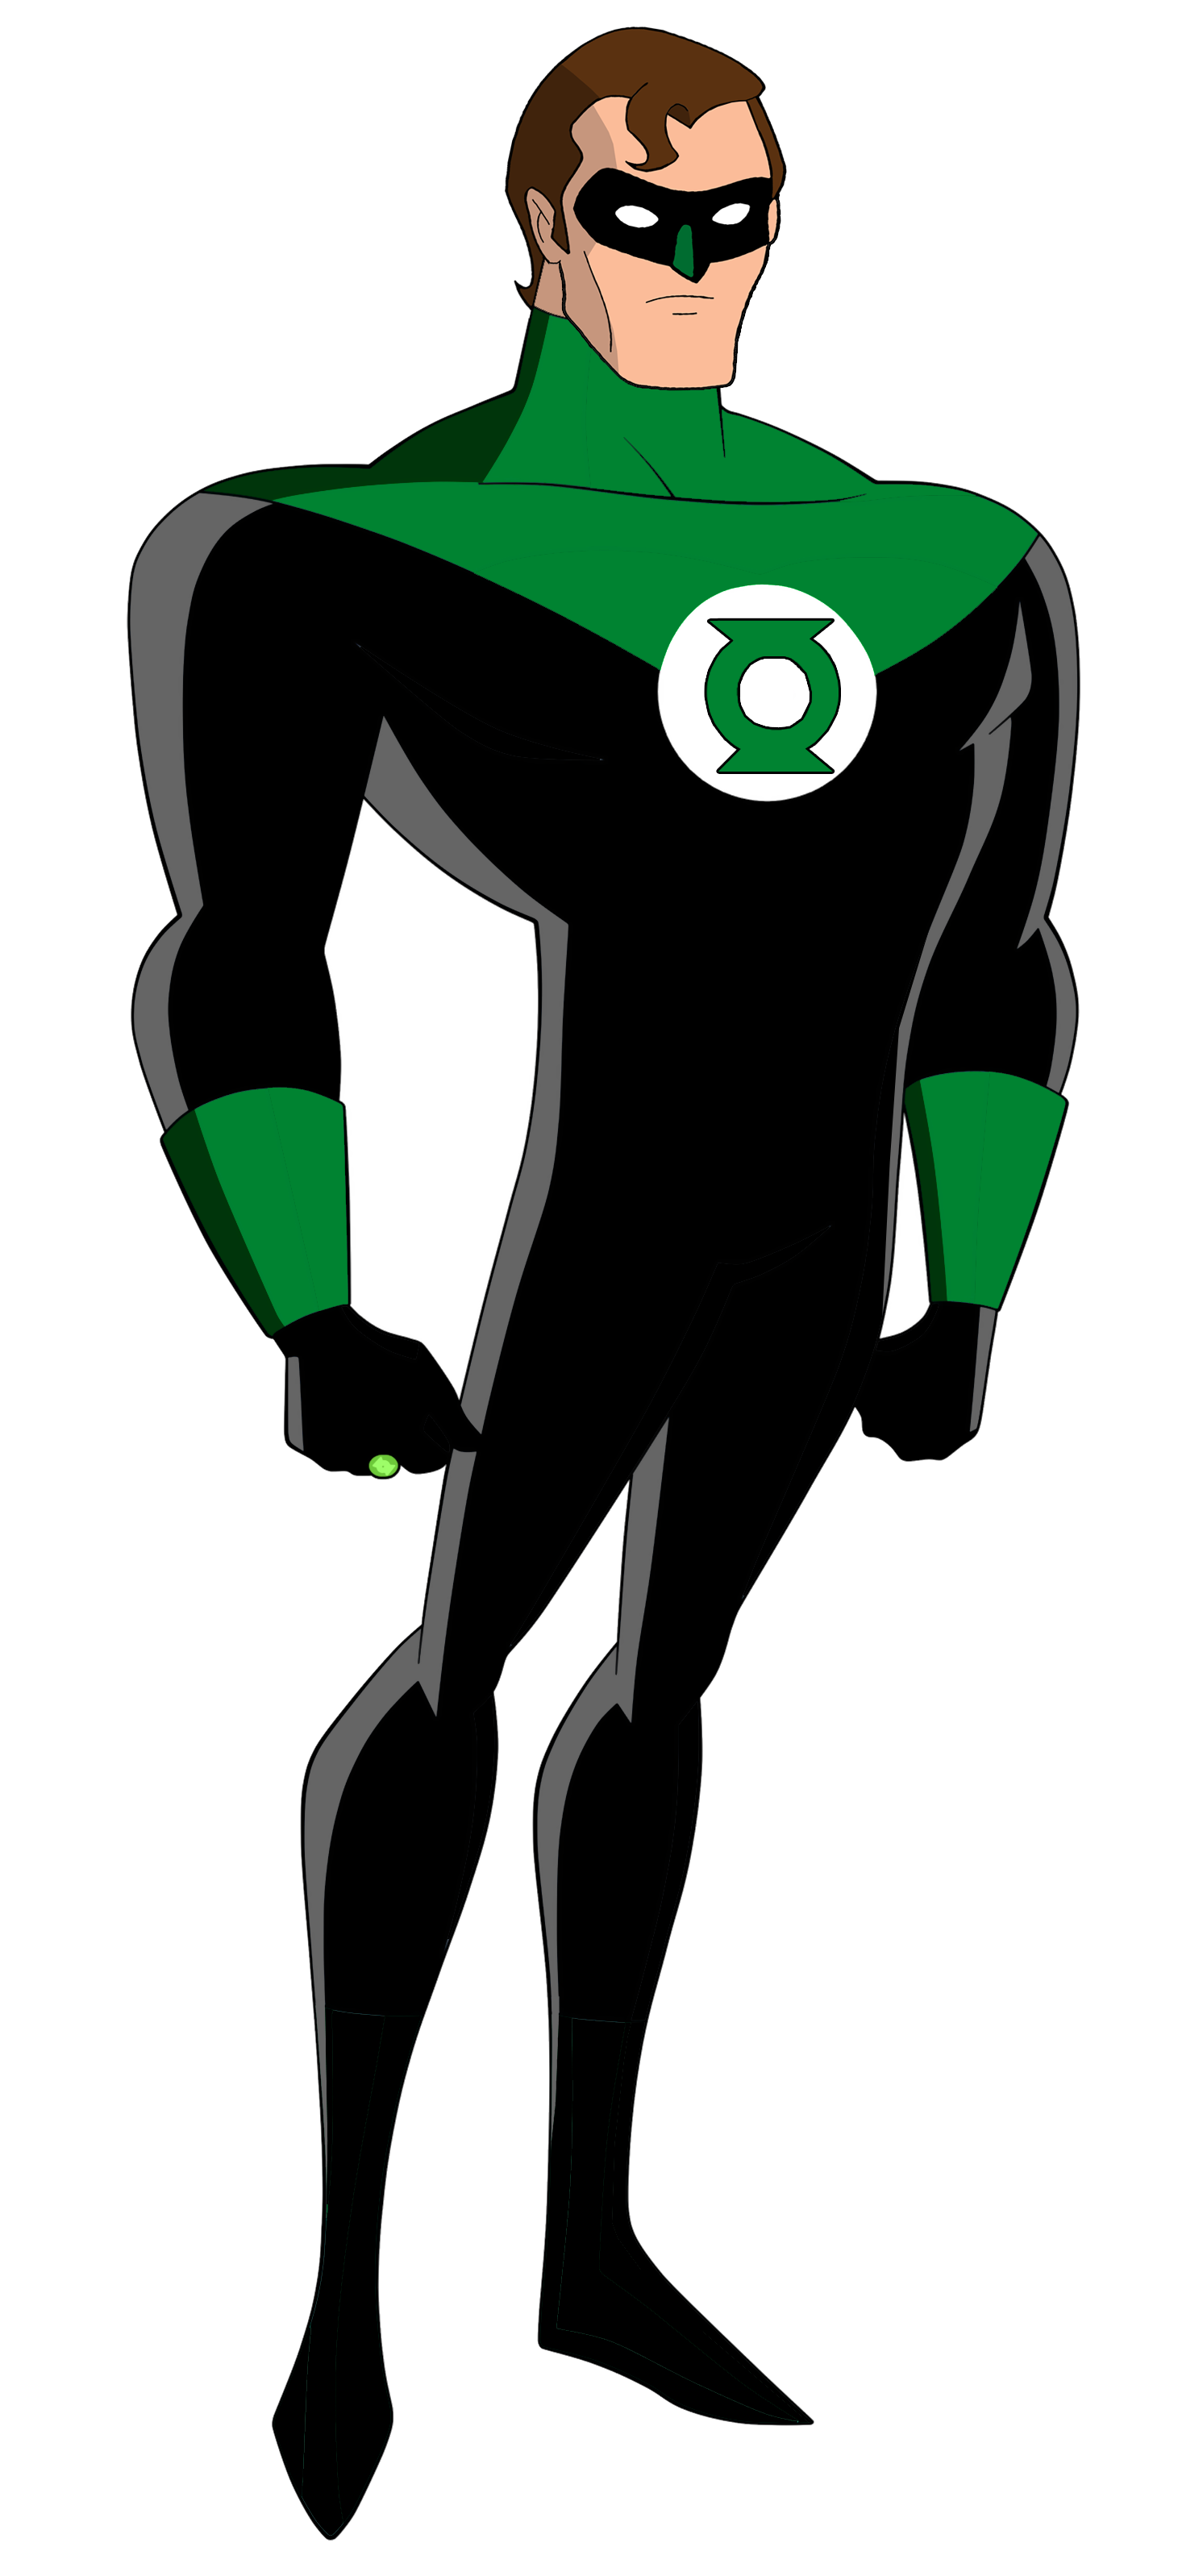 The Green Lantern PNG Transpa